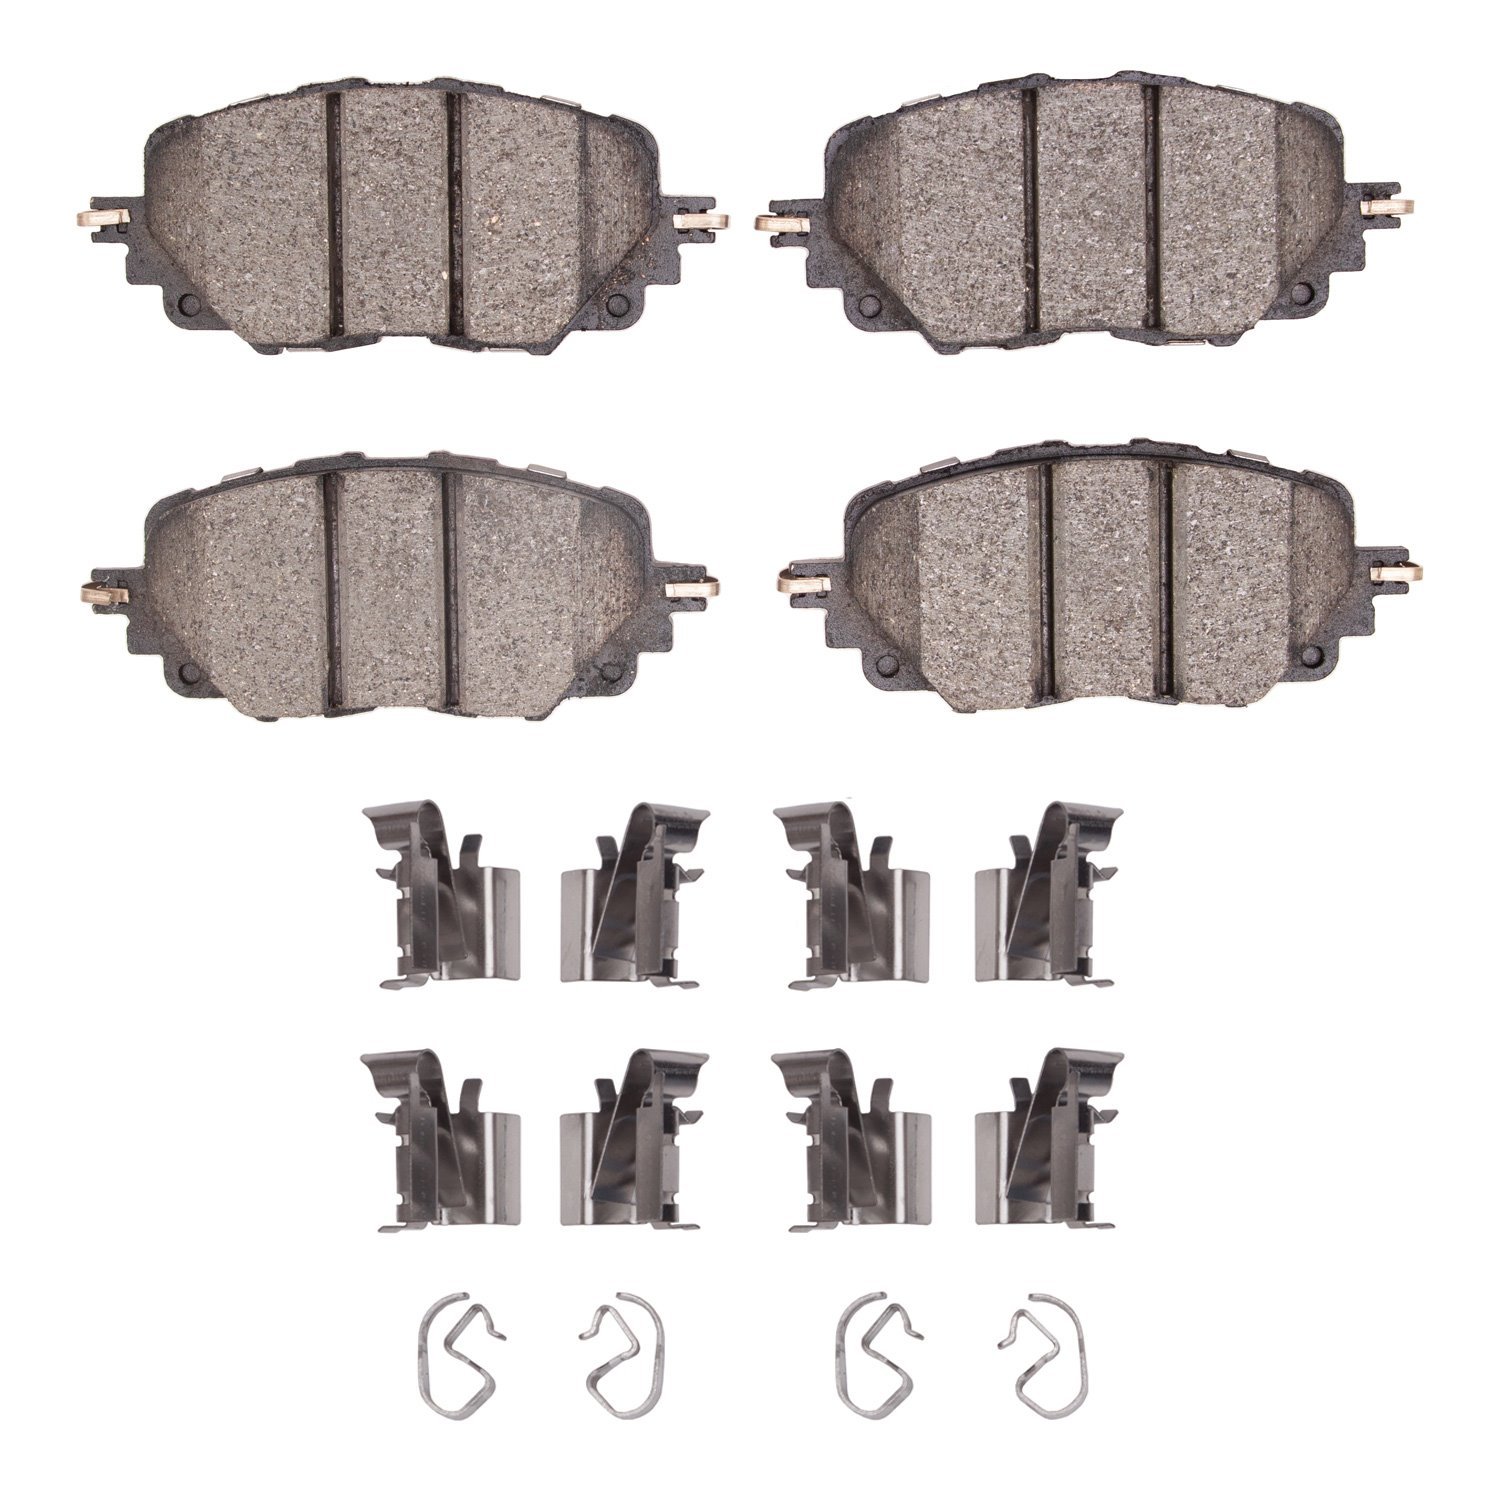 1551-1903-01 5000 Advanced Ceramic Brake Pads & Hardware Kit, Fits Select Multiple Makes/Models, Position: Front